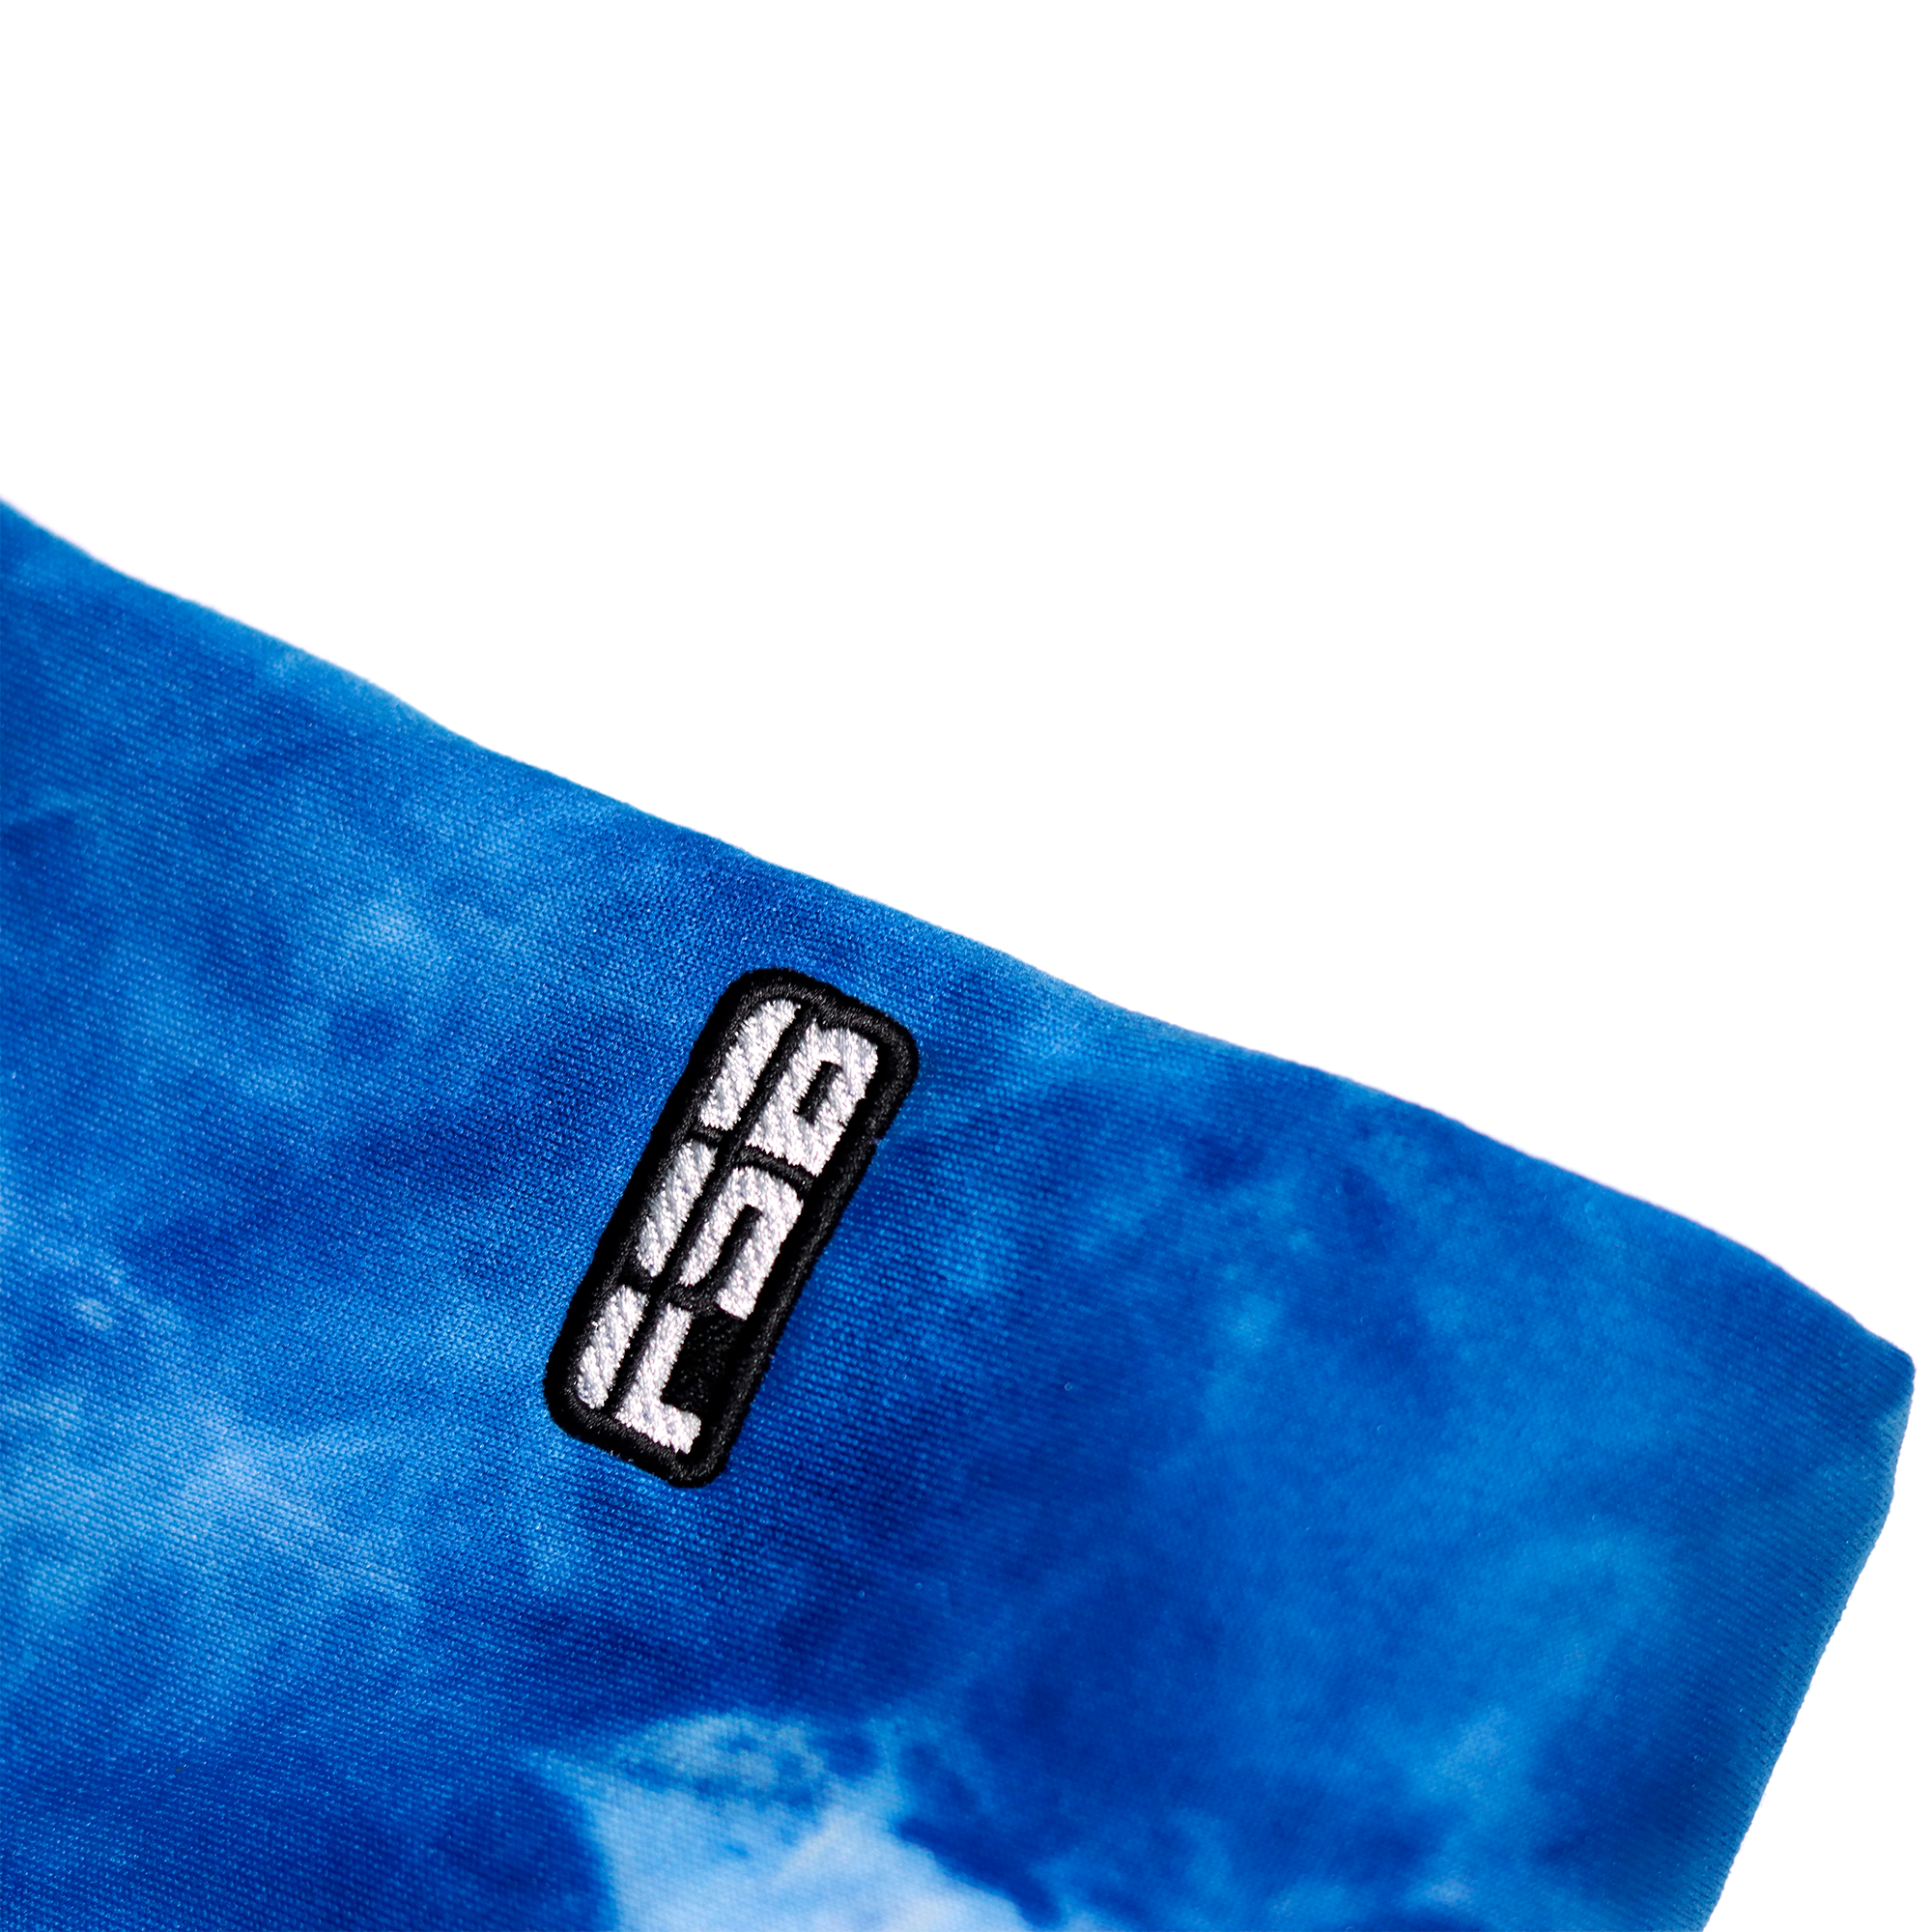 Conjunto de Pants térmico color azul, técnica Tie-Dye. FSB.